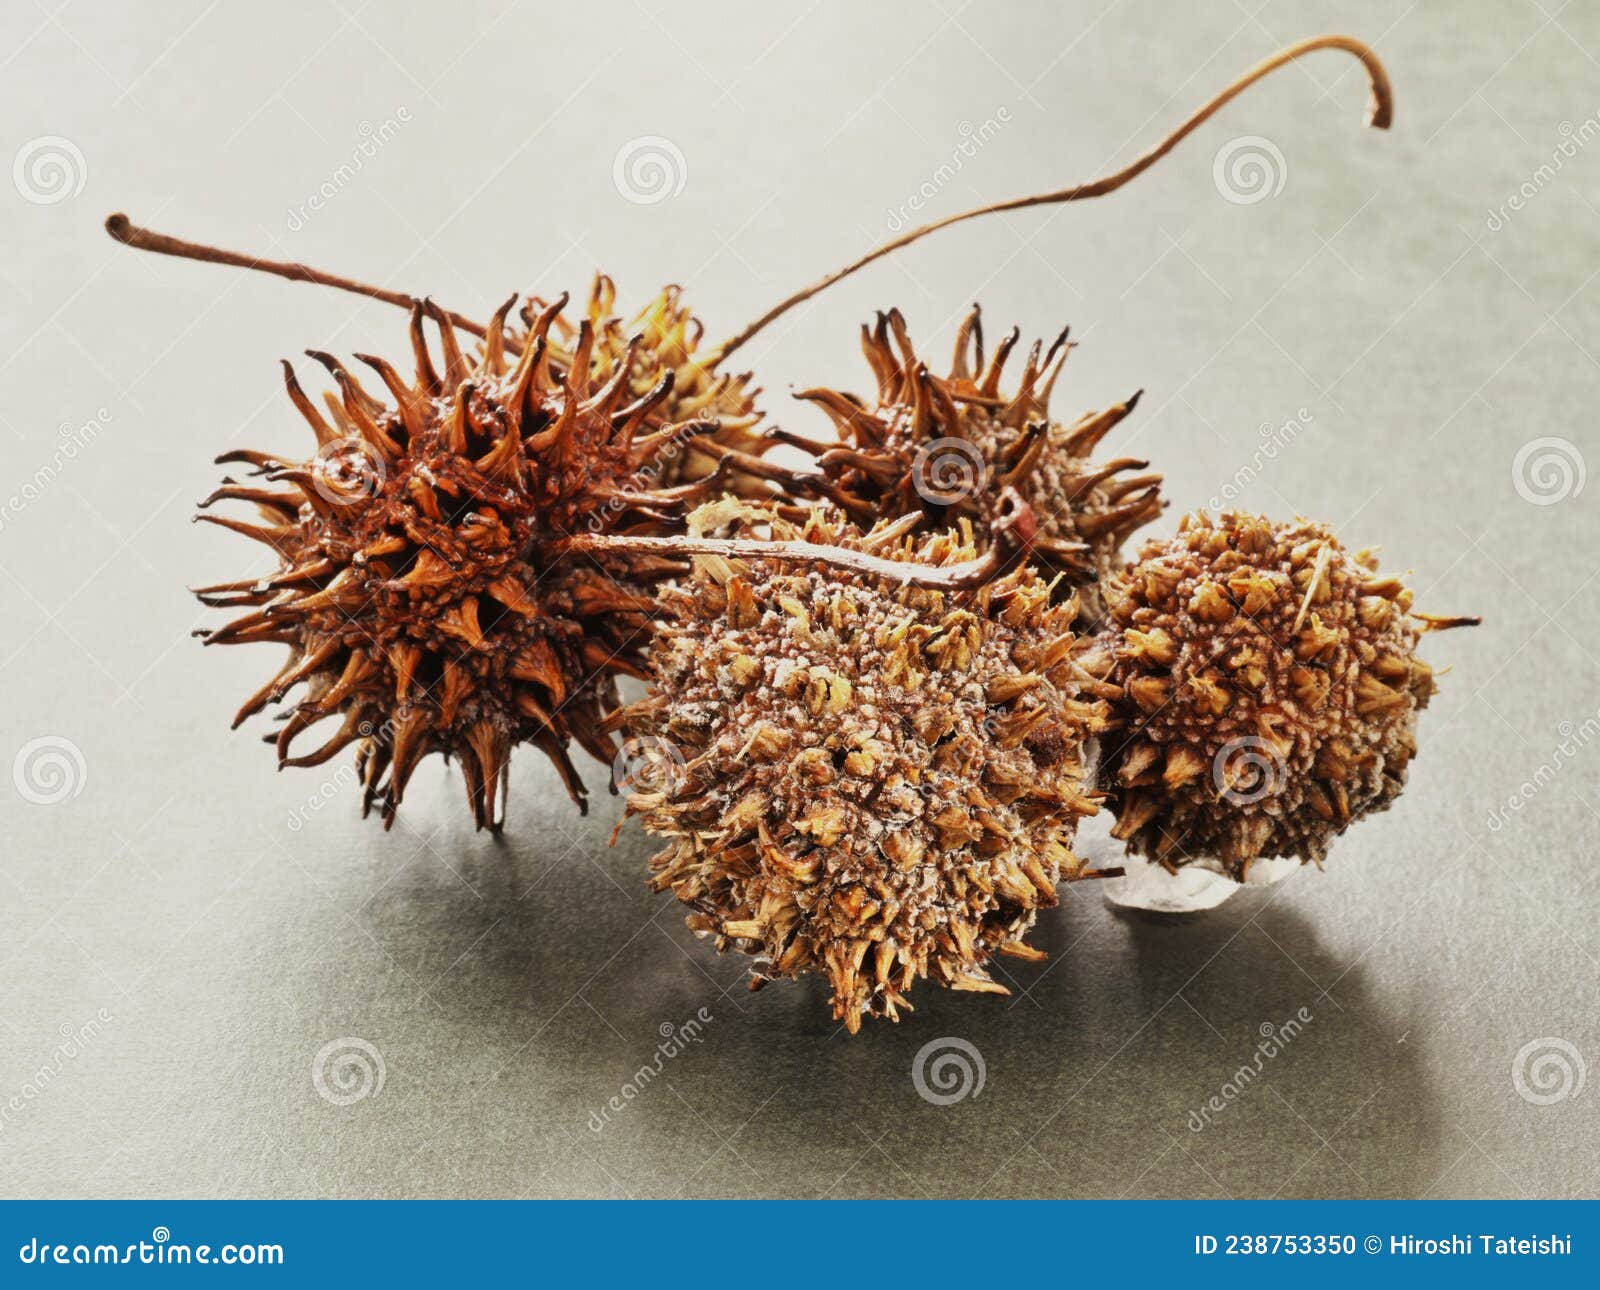 closeup of a nut of american sweetgum or liquidambar styraciflua or american storax or hazel pine